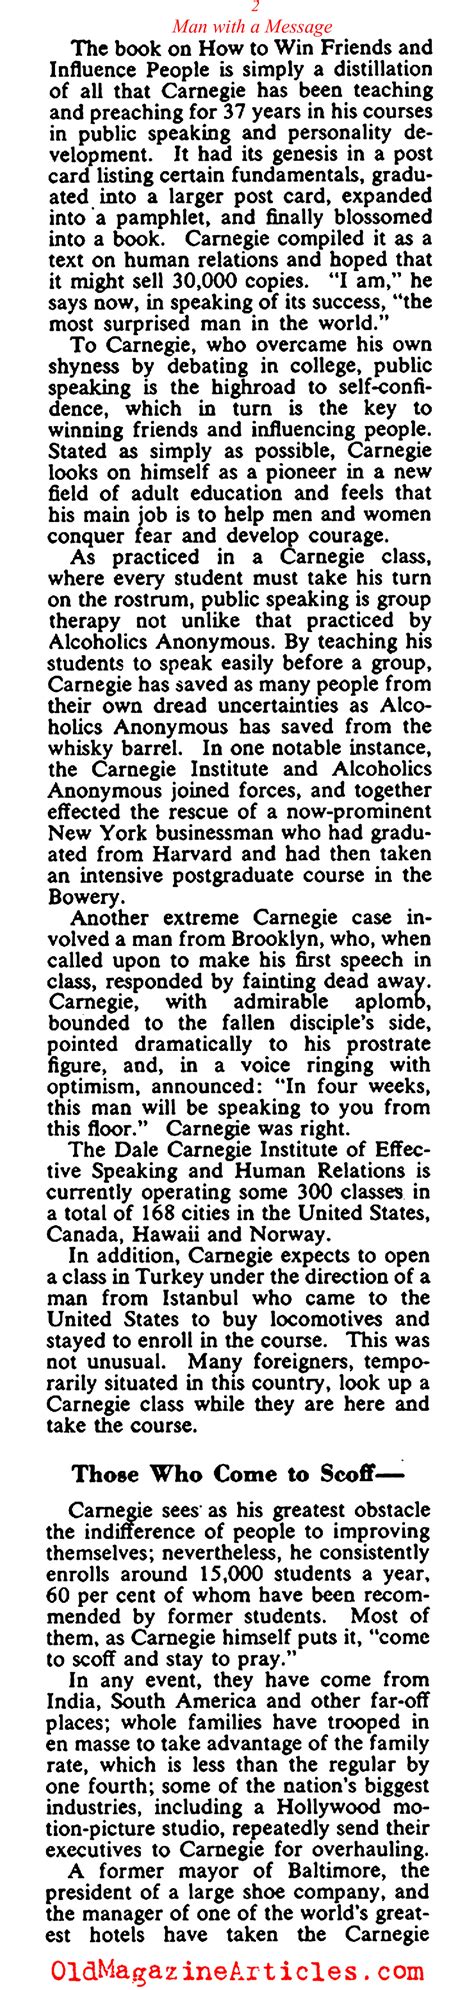 DALE CARNEGIE NEWSPAPER ARTICLE,DALE CARNEGIE MAGAZINE ARTICLE 1949,WHO WAS DALE CARNEGIE ...